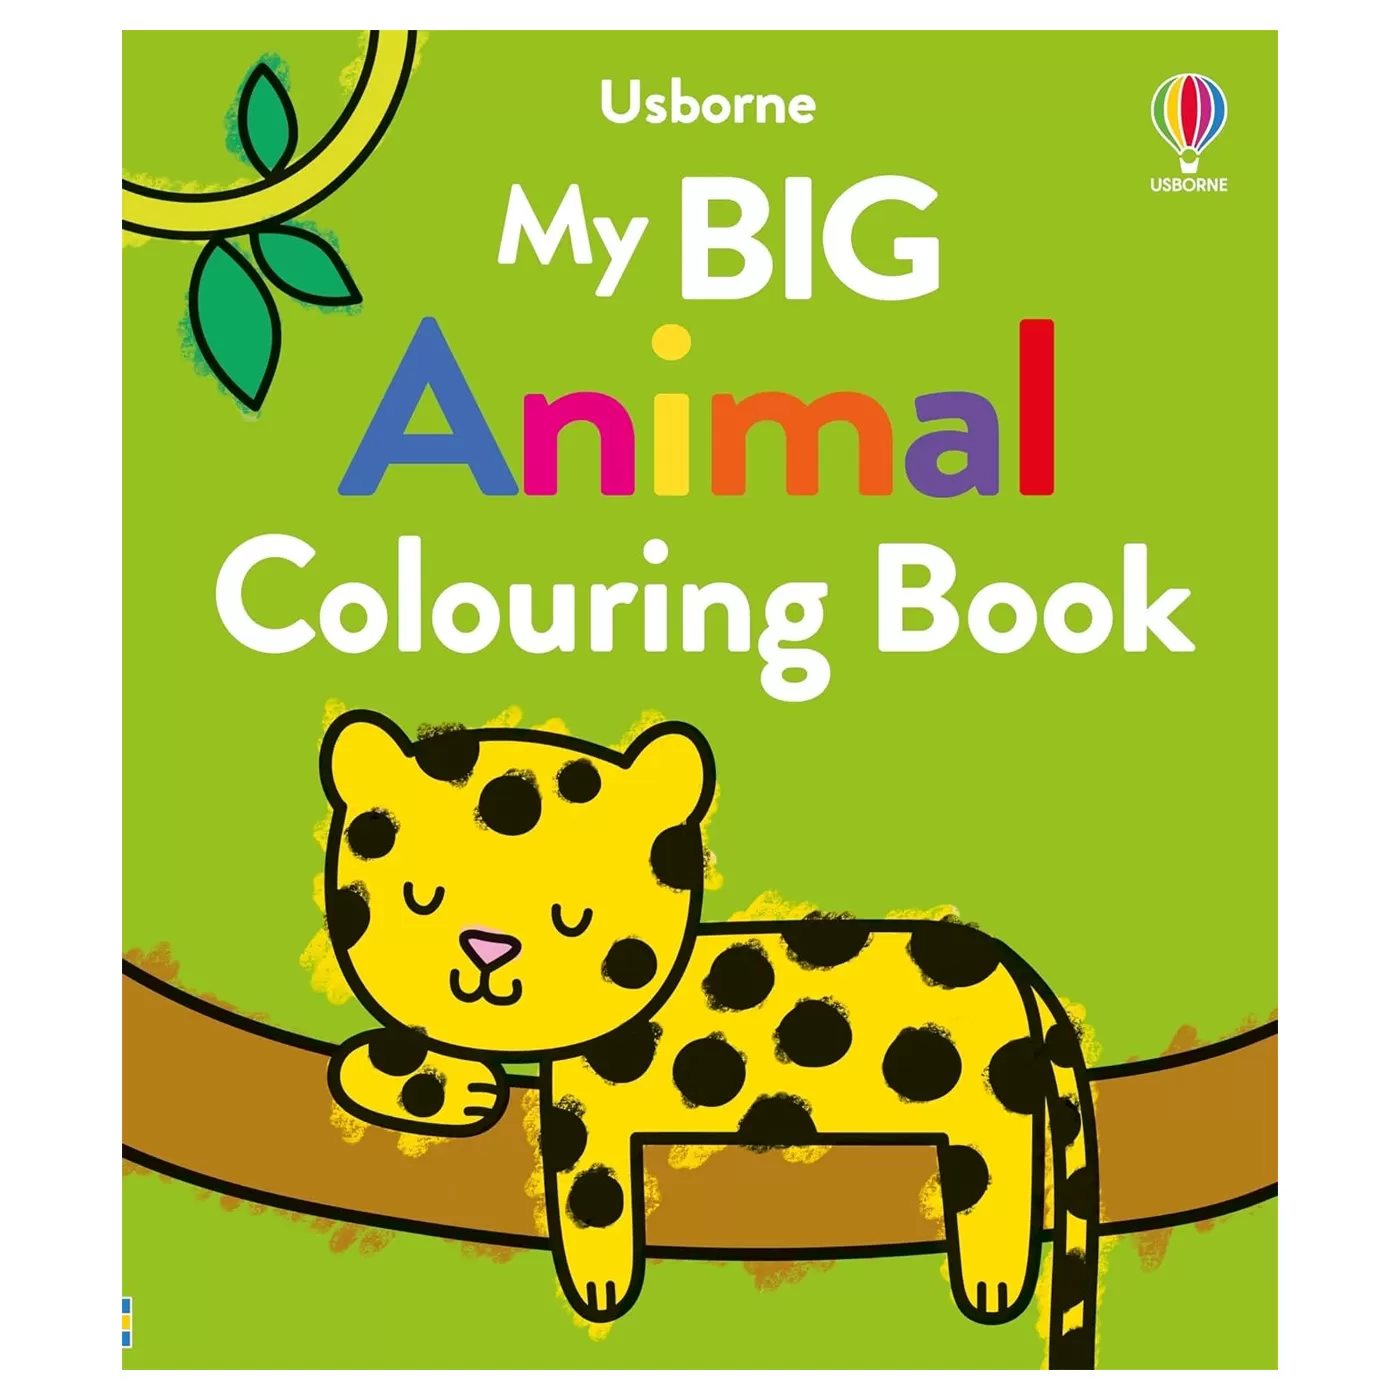  My Big Animal Colouring Book